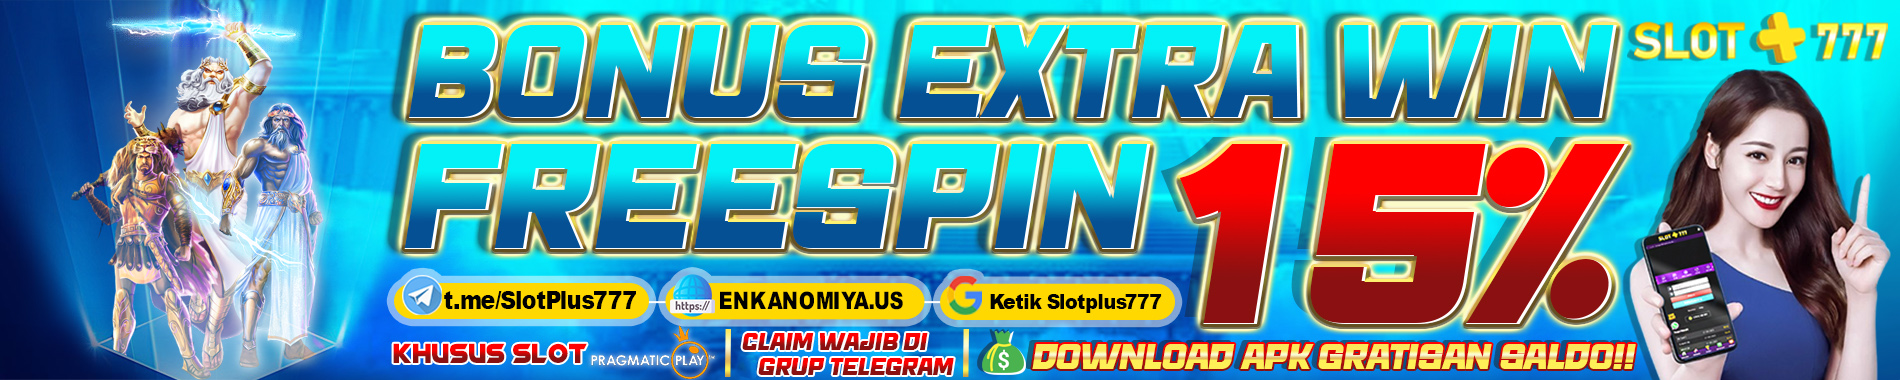 Slot Extra Plus Freespin 15%